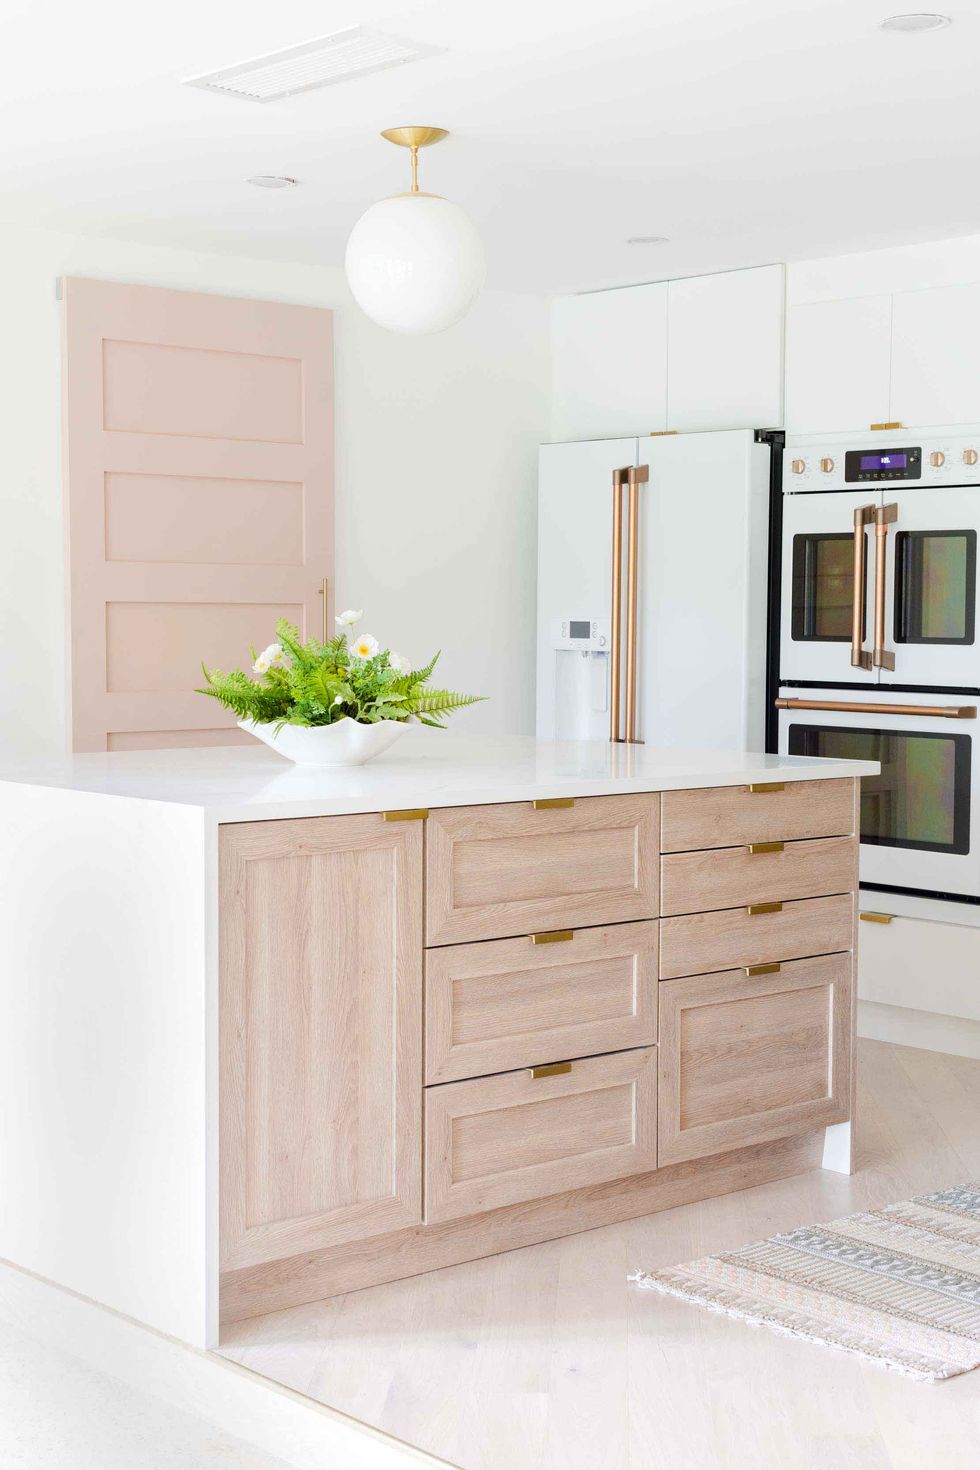 Brass Grill Cabinet Doors Design Ideas  Cabinet door designs, White shaker  kitchen cabinets, Kitchen island table